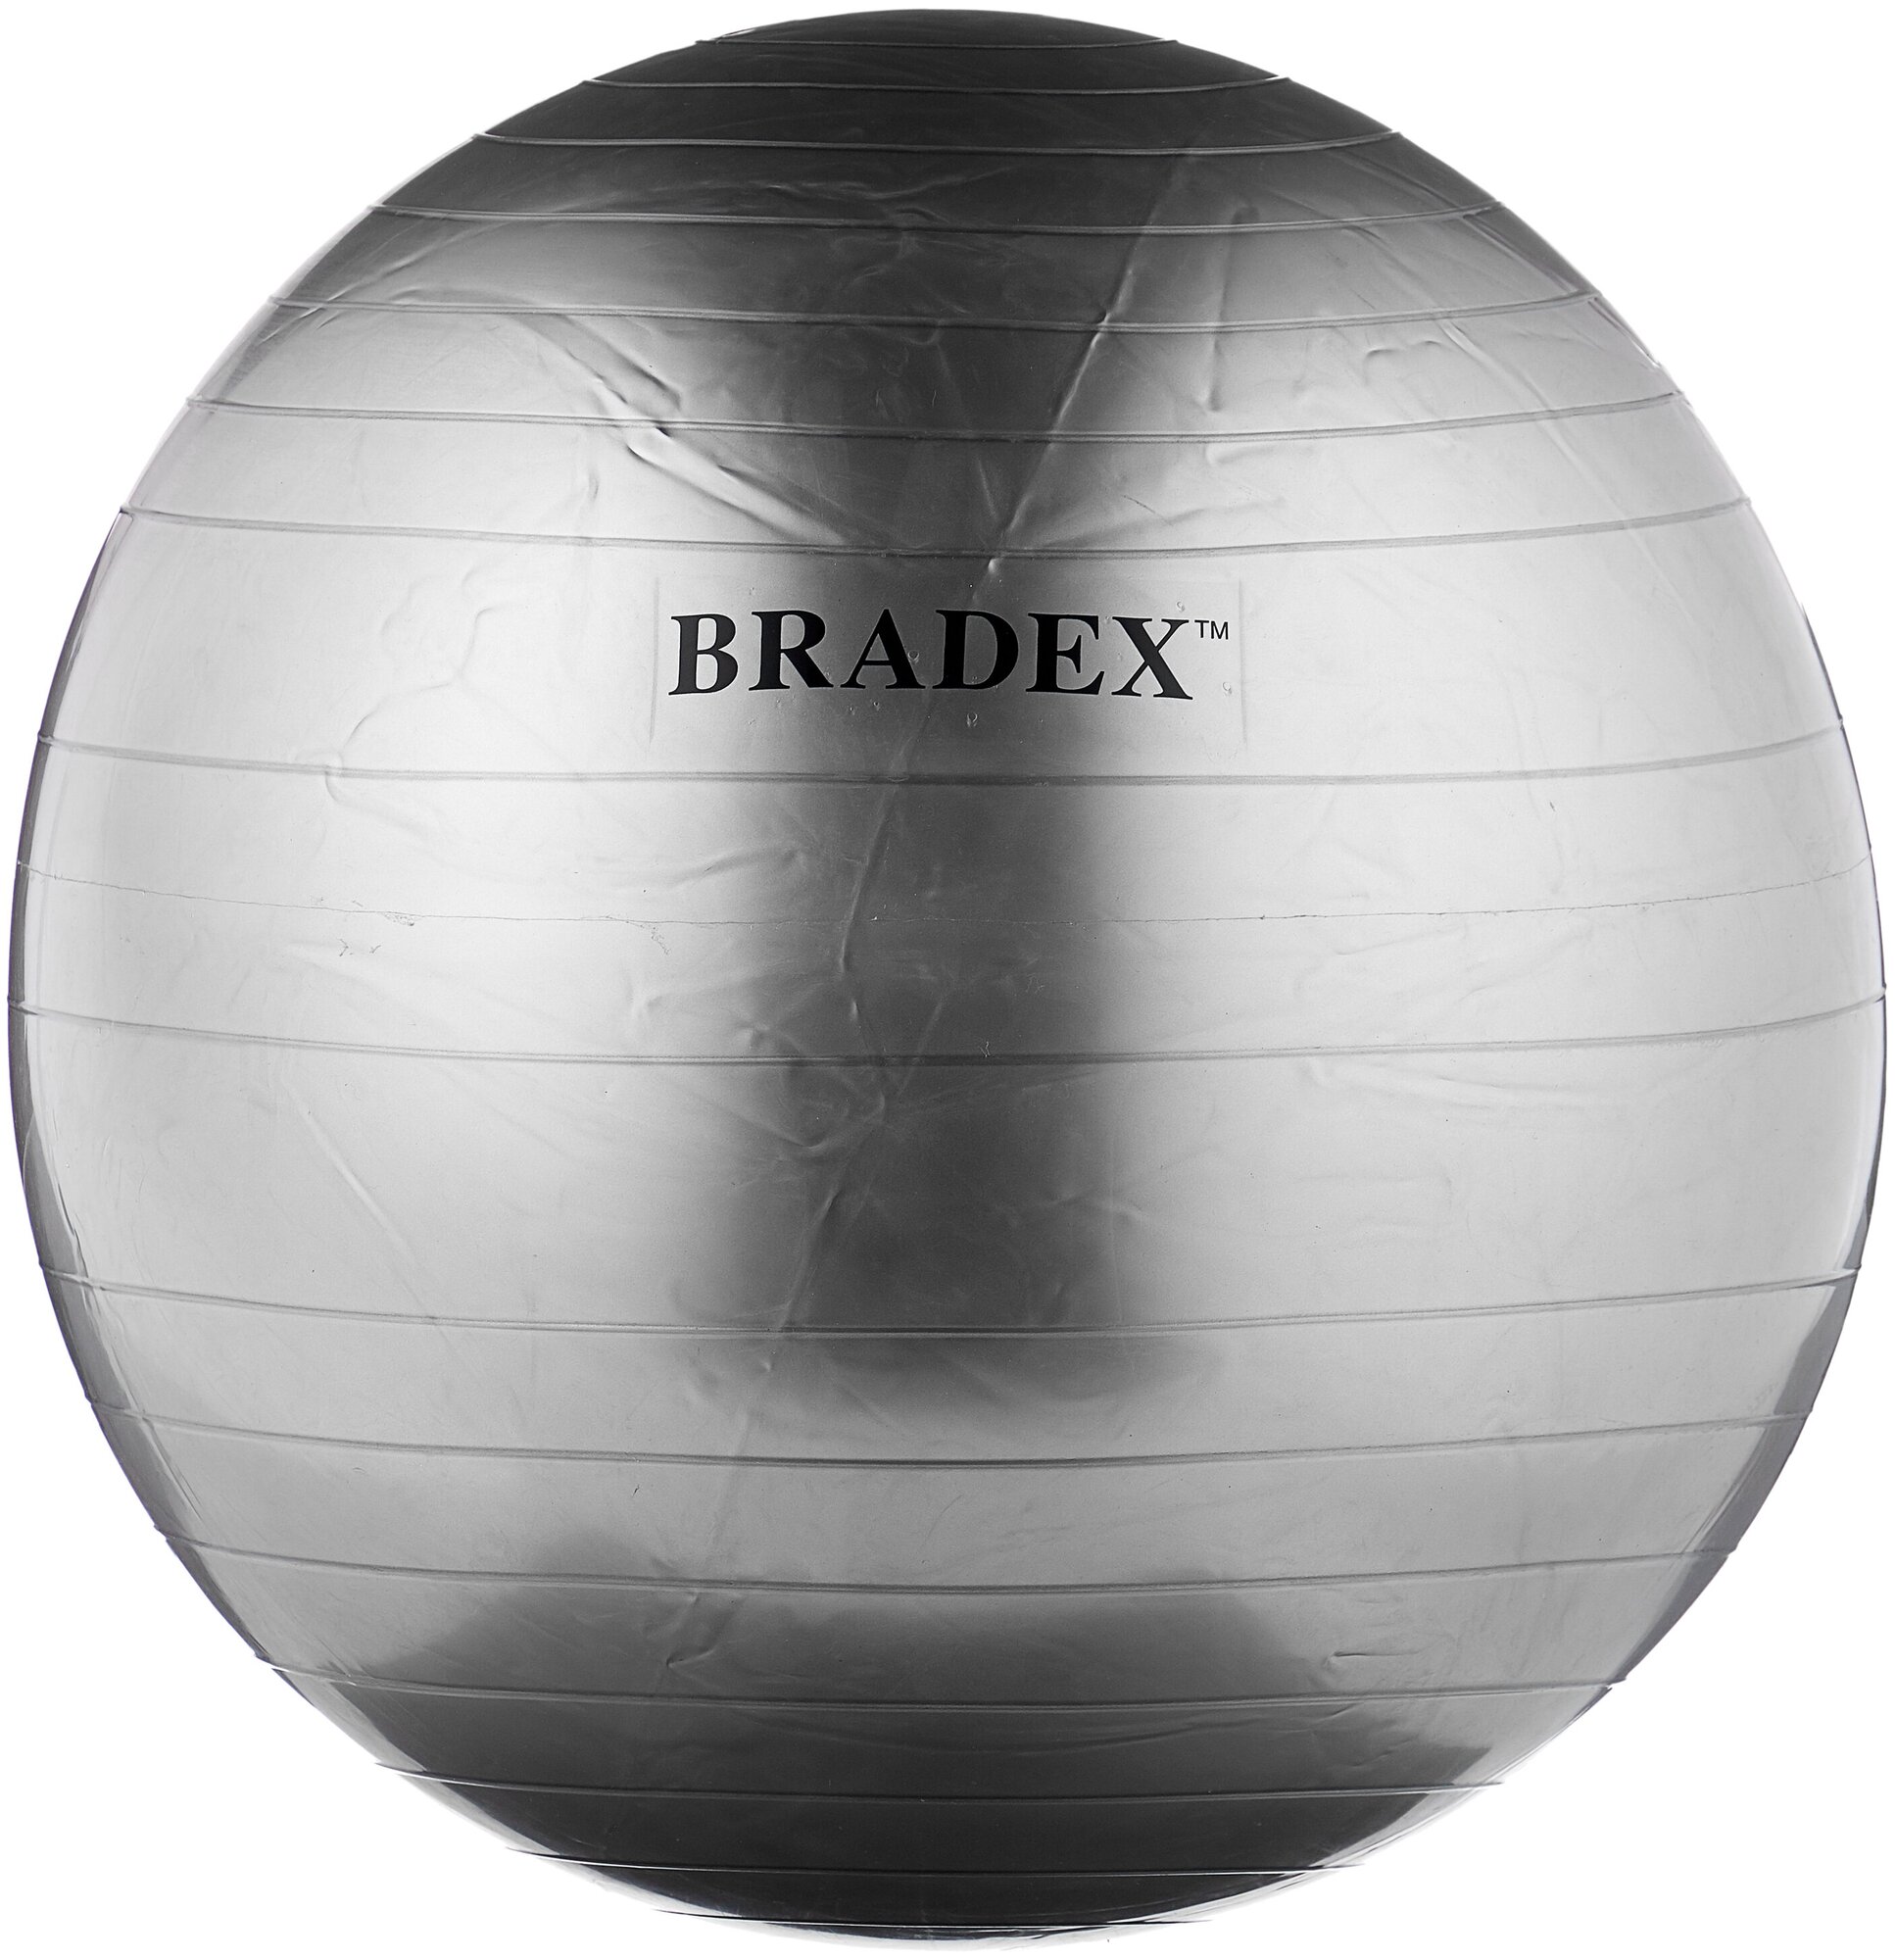 BRADEX    -75  